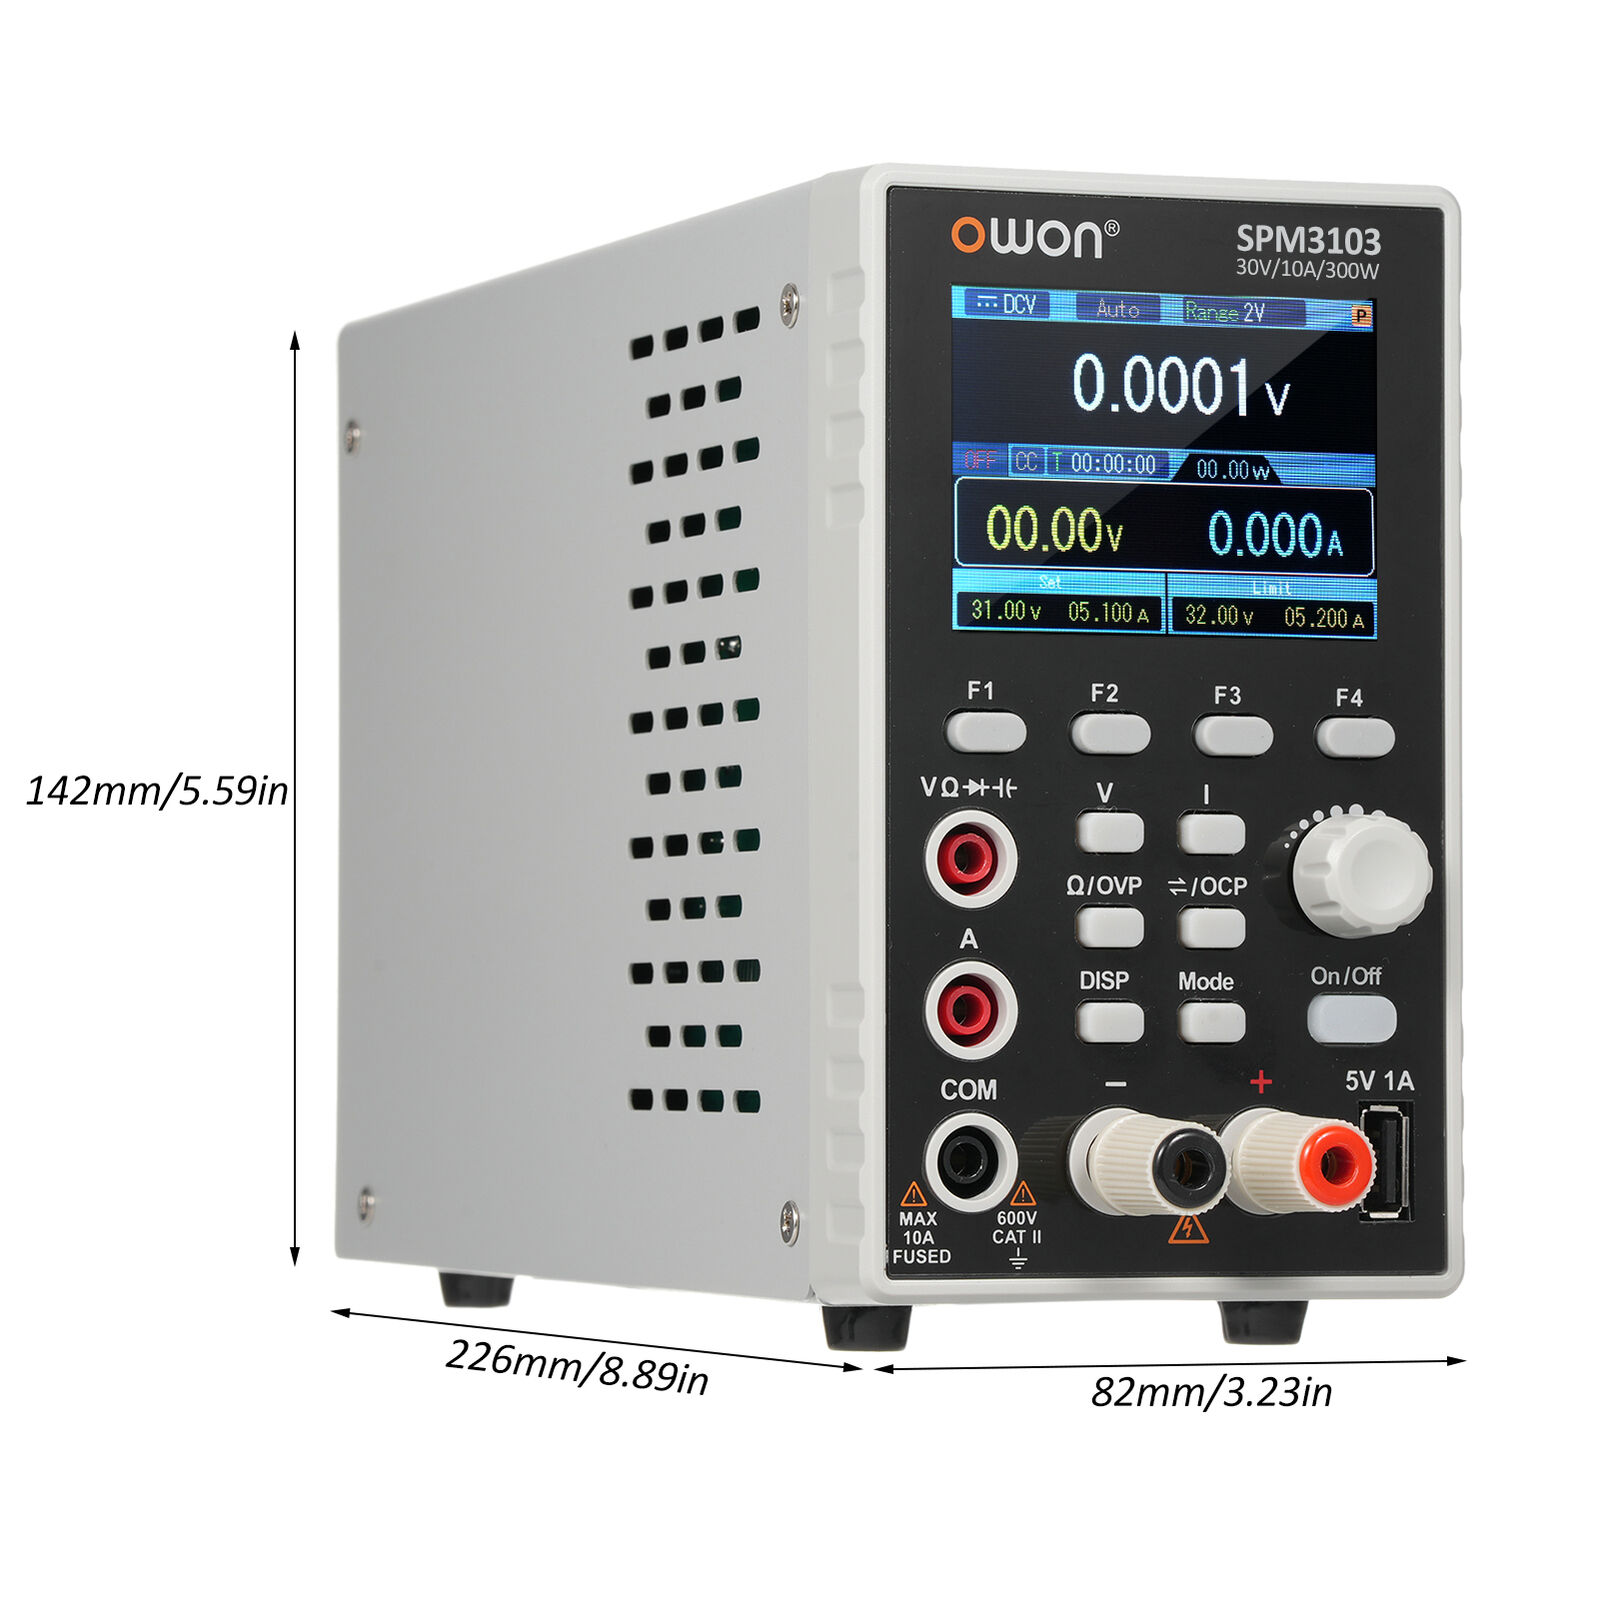 OWON SPM3103 1 Kanal Netzteil + Multimeter 0-30V 10A 300W Labornetzgerät USB SCPI